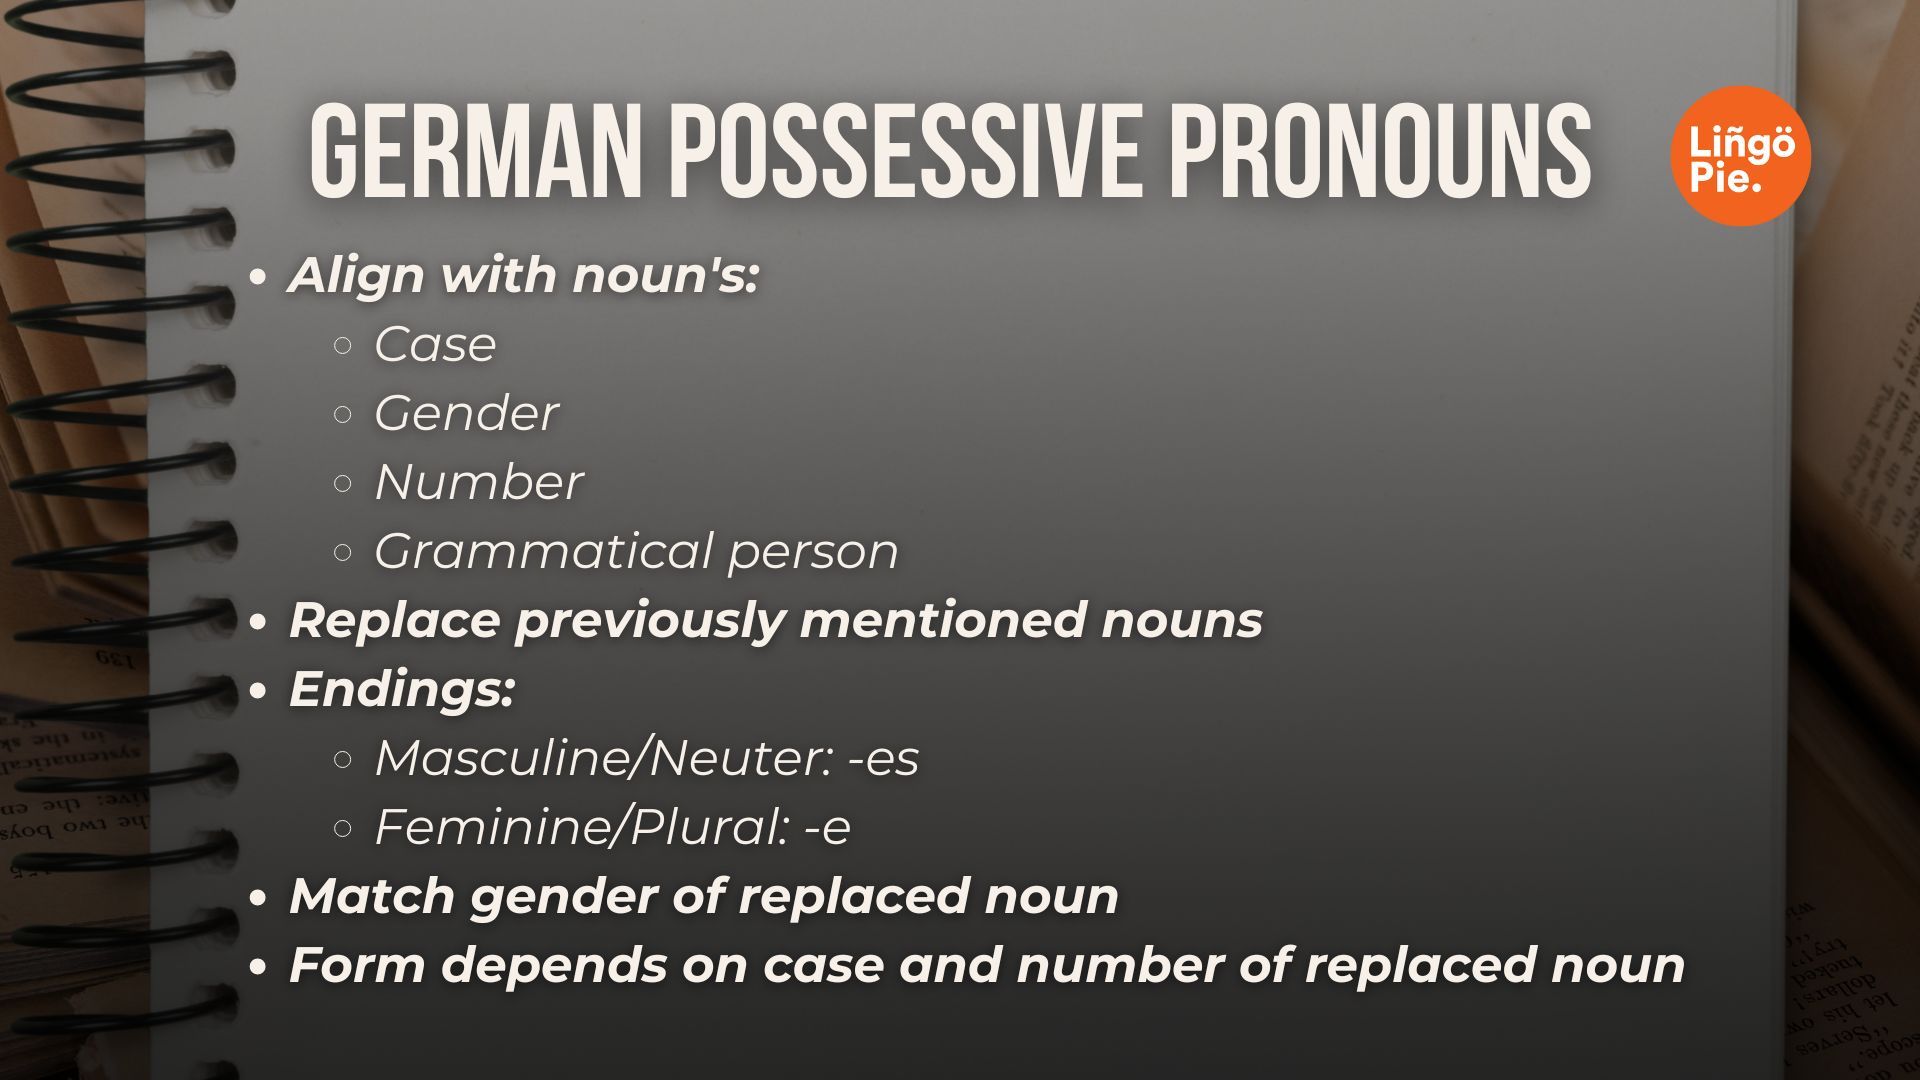 Basic Rules for Using German Possessive Pronouns